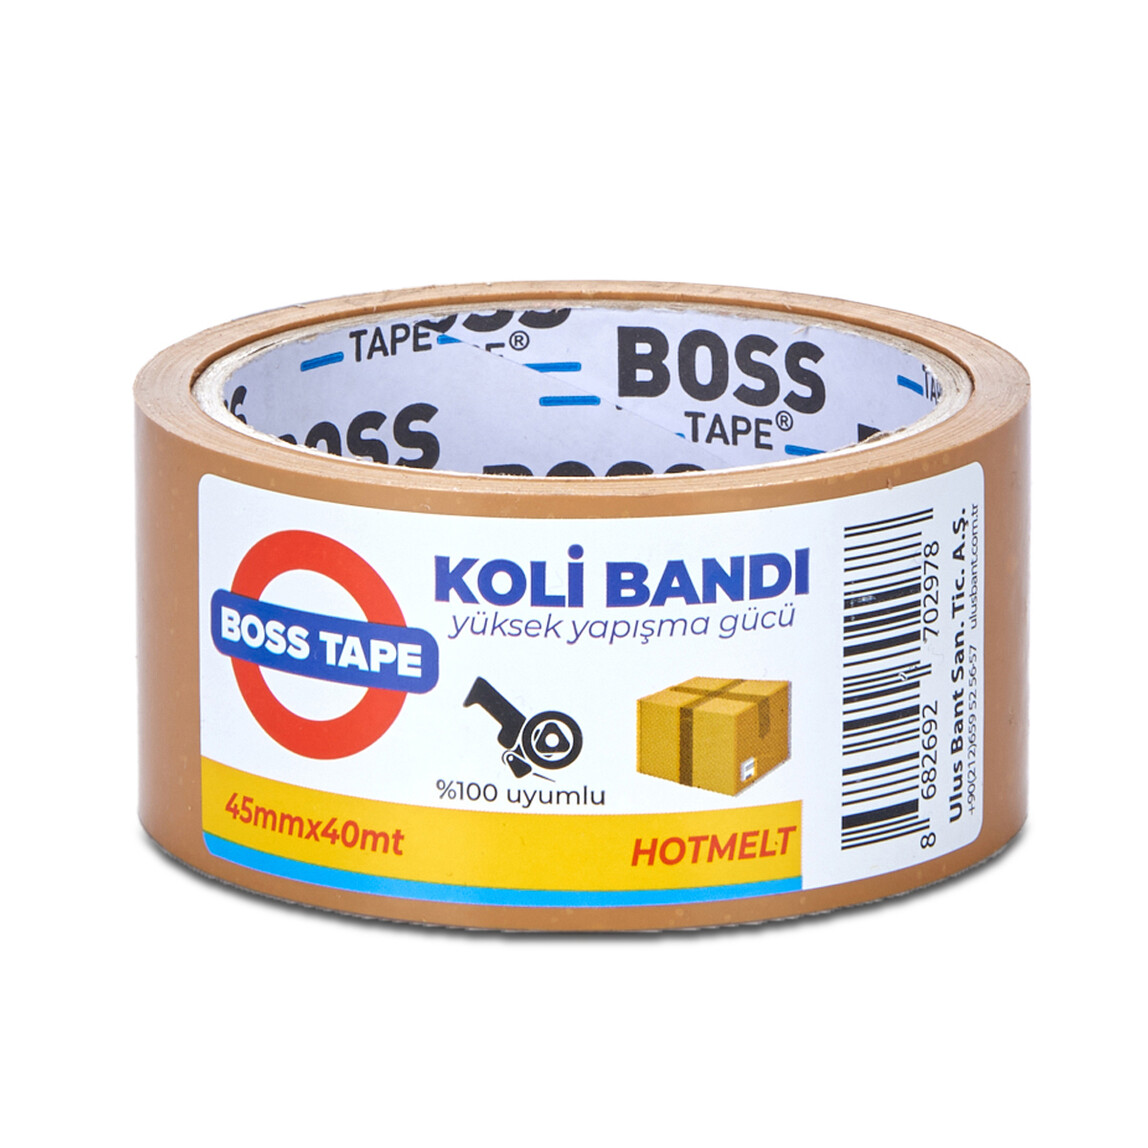    Boss Tape Hotmelt Koli Bandı  